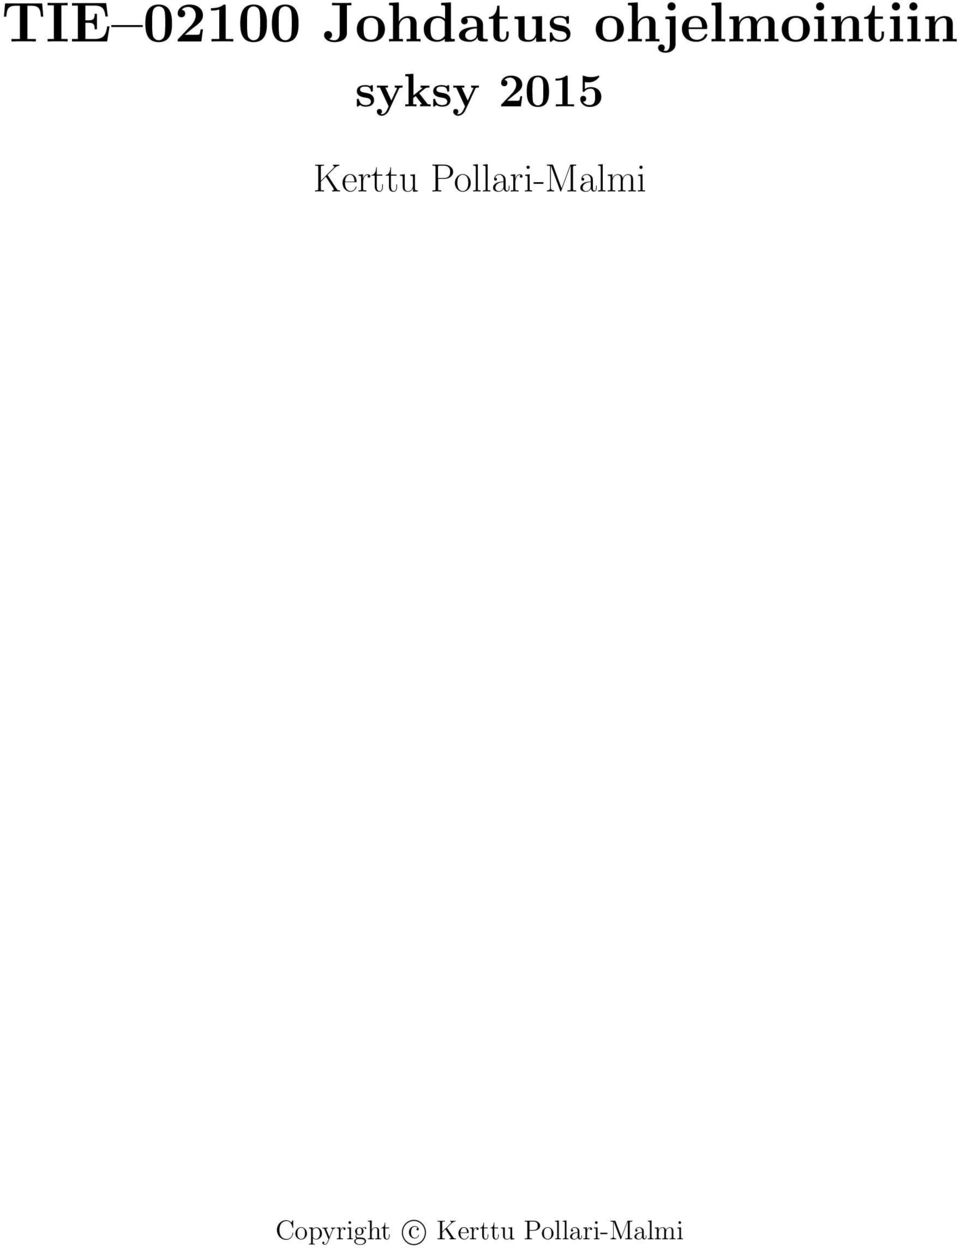 Kerttu Pollari-Malmi